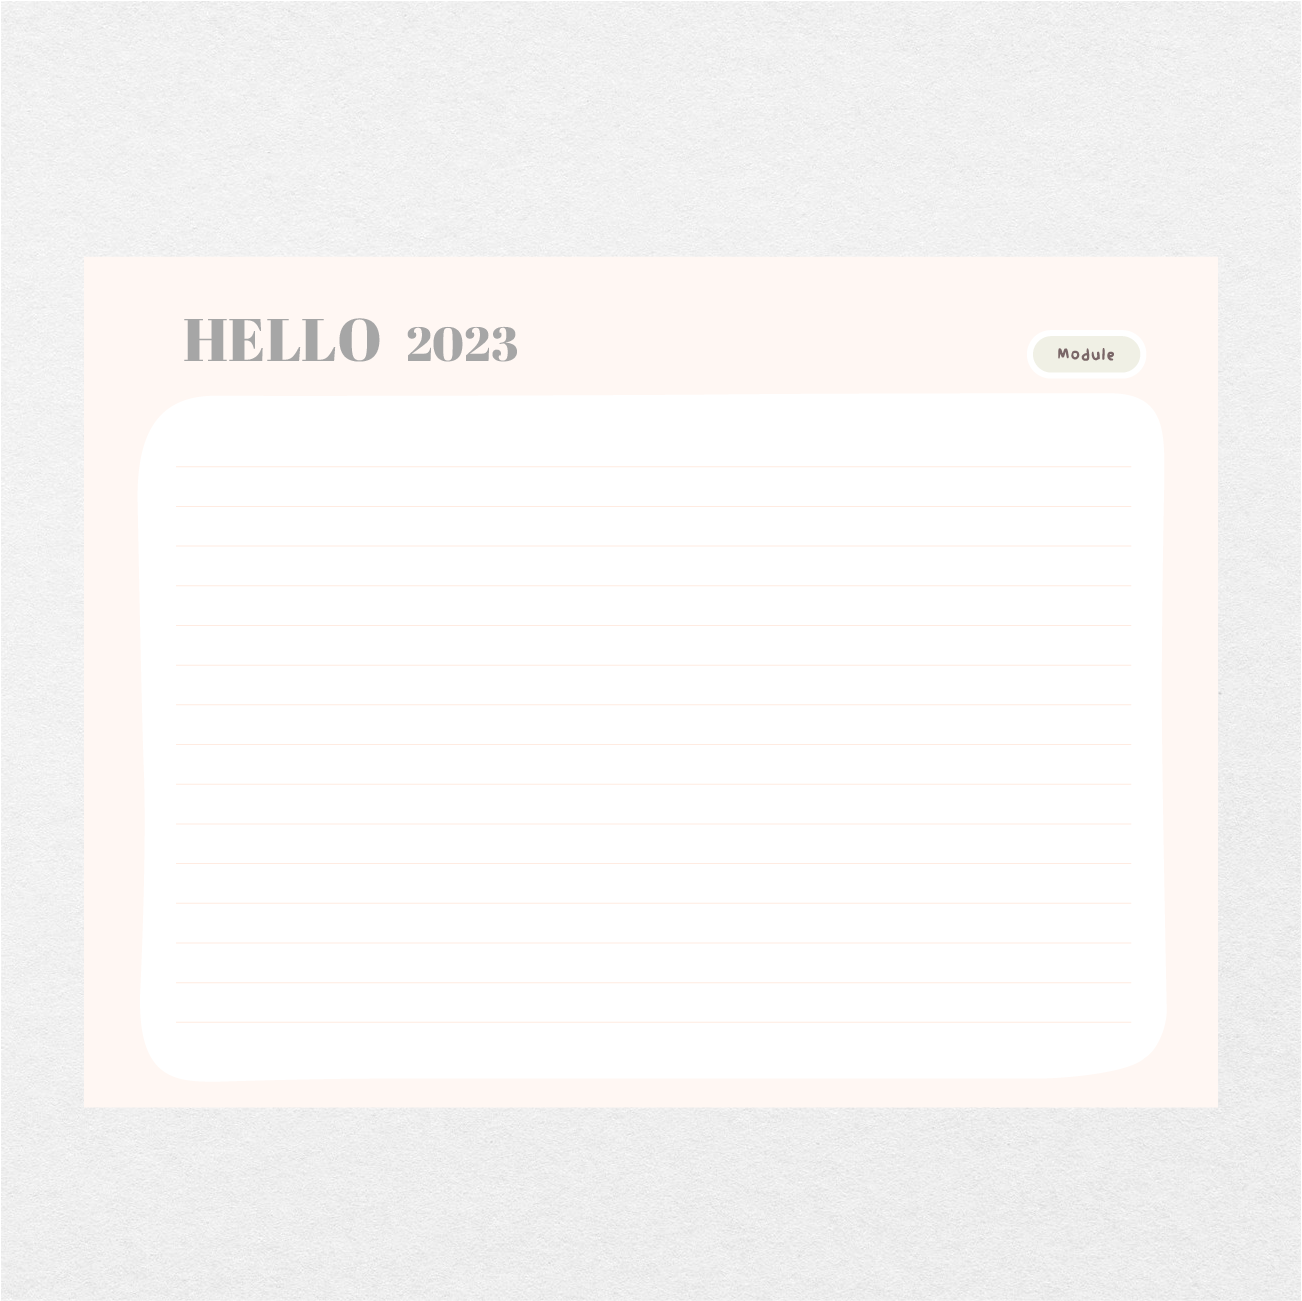 Digital Hello 2023 Year-round Planner - Stationery Pal